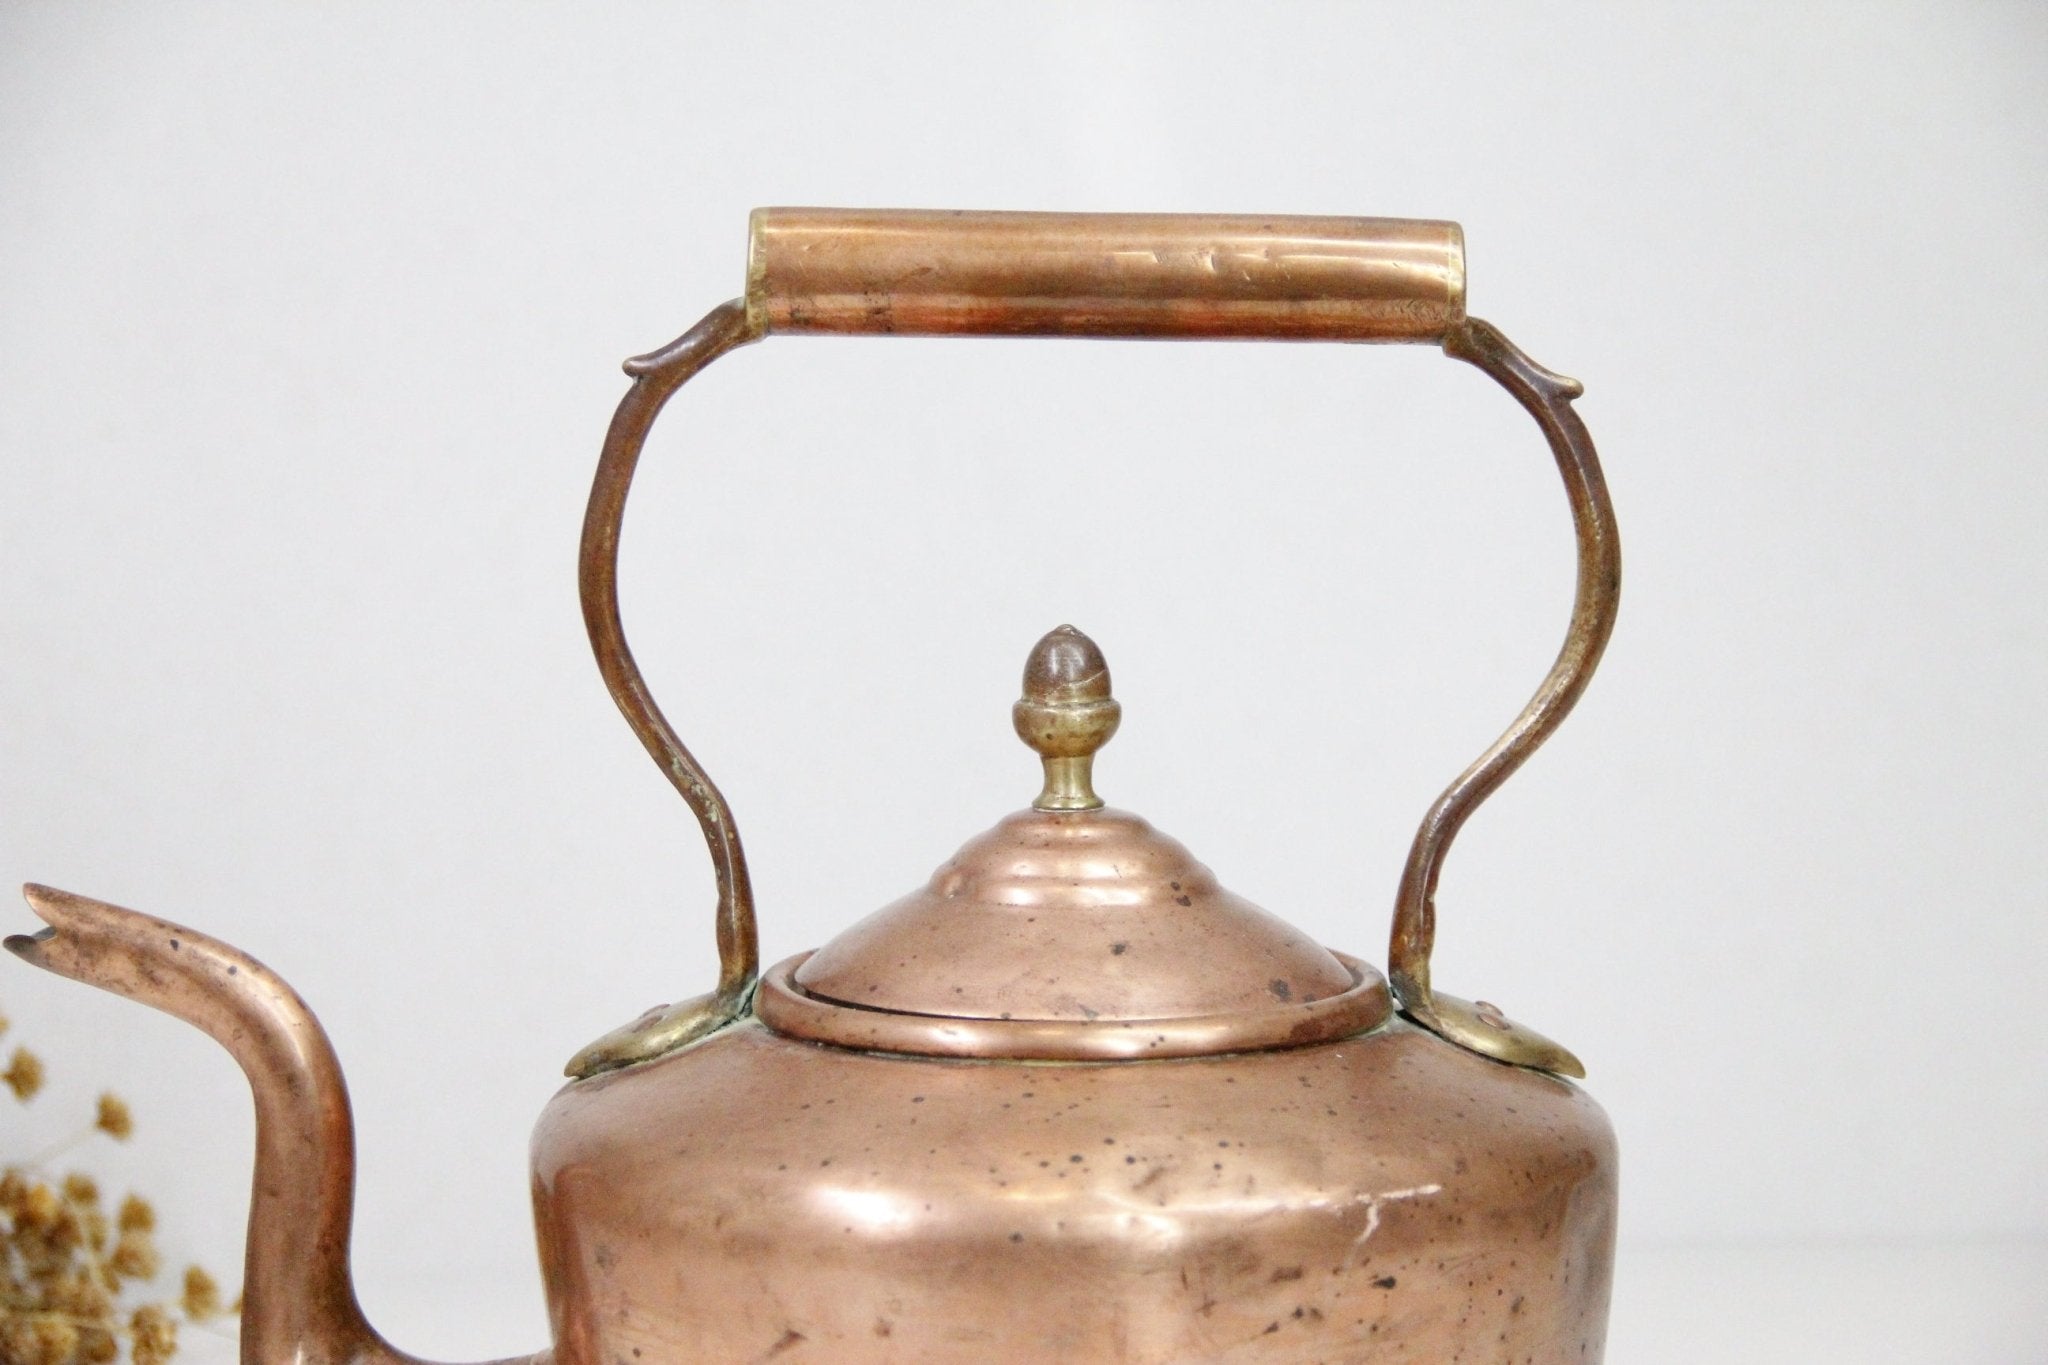 Antique Copper Kettle | 19TH Century France - Debra Hall Lifestyle